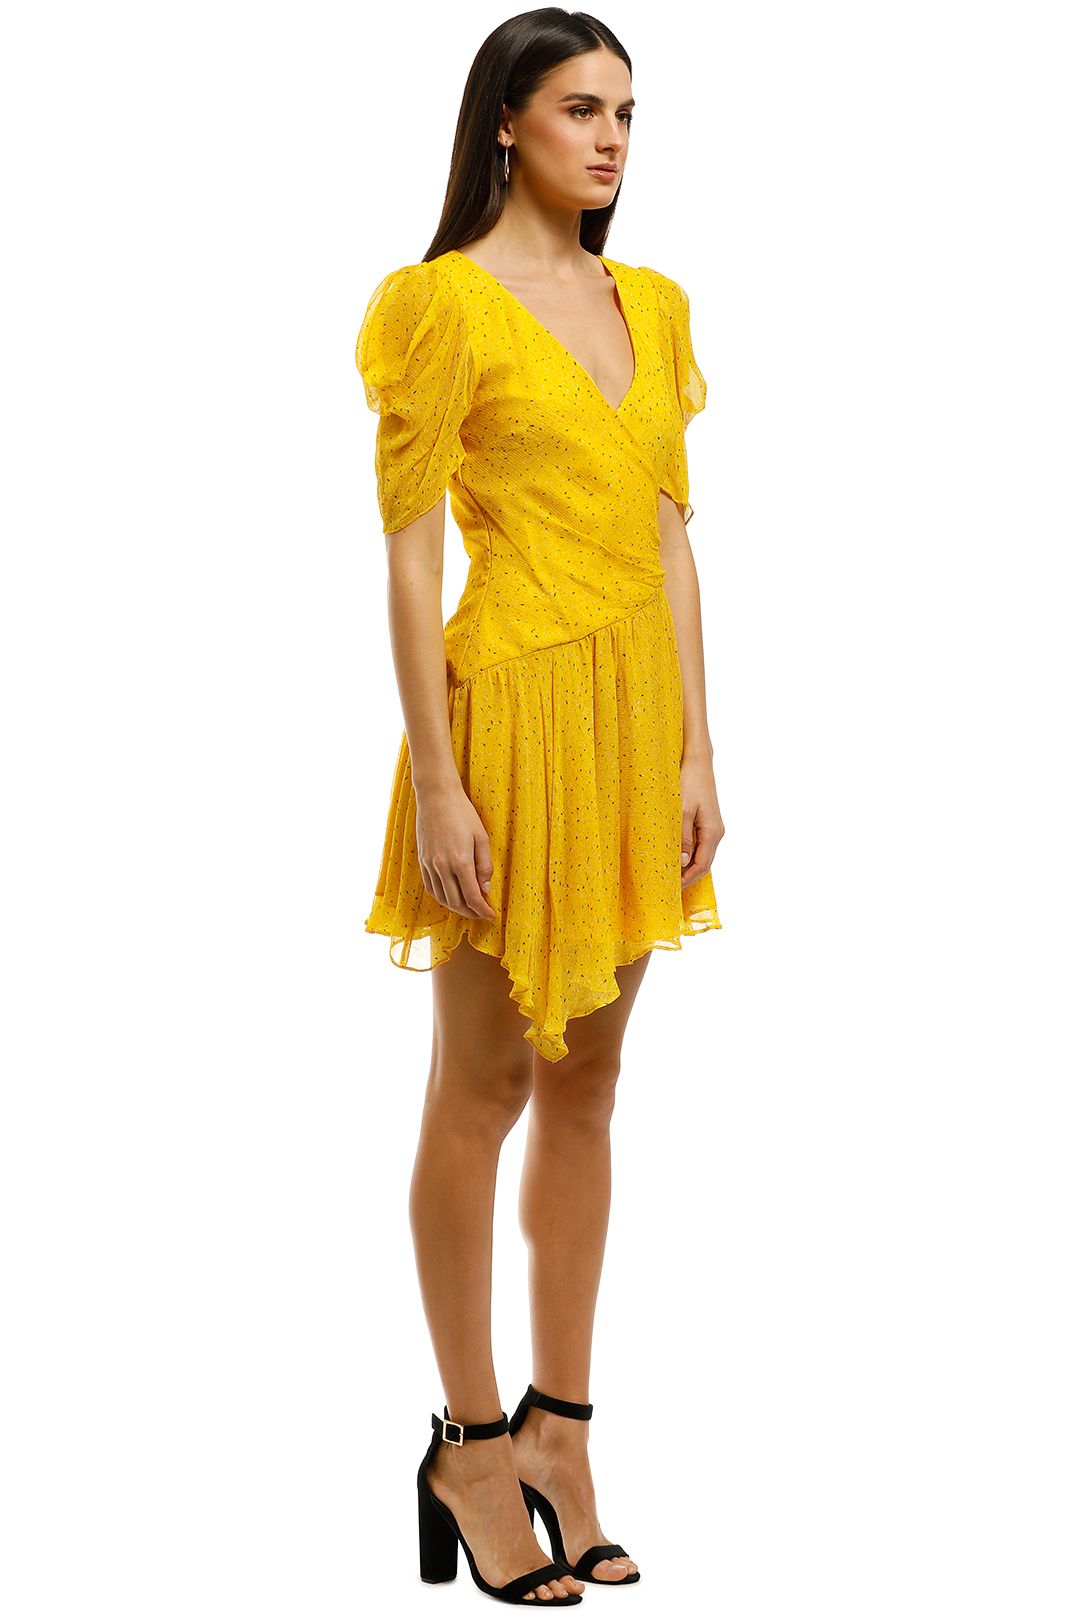 Bec+Bridge-Hibiscus-Golden-Mini-Dress-Marigold-Print-Side